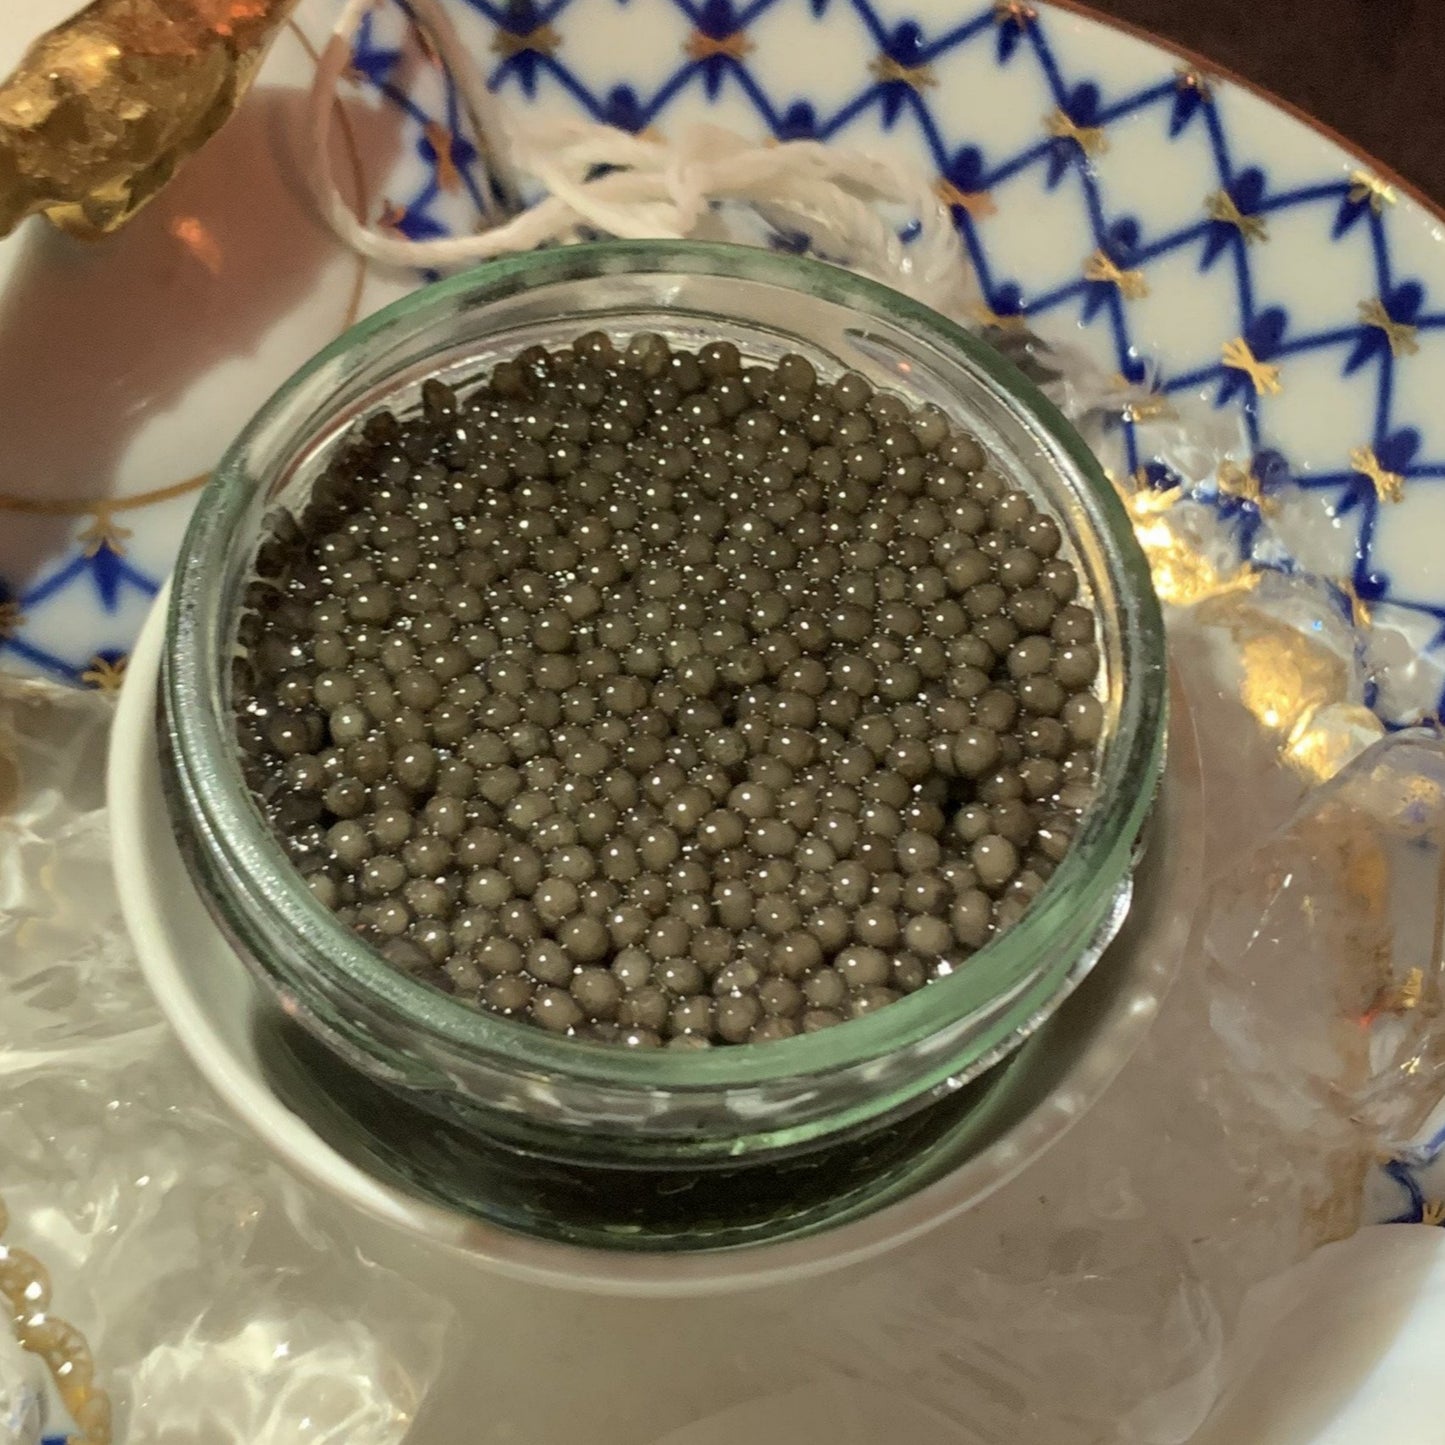 Iranian Imperial Beluga Caviar 30gm